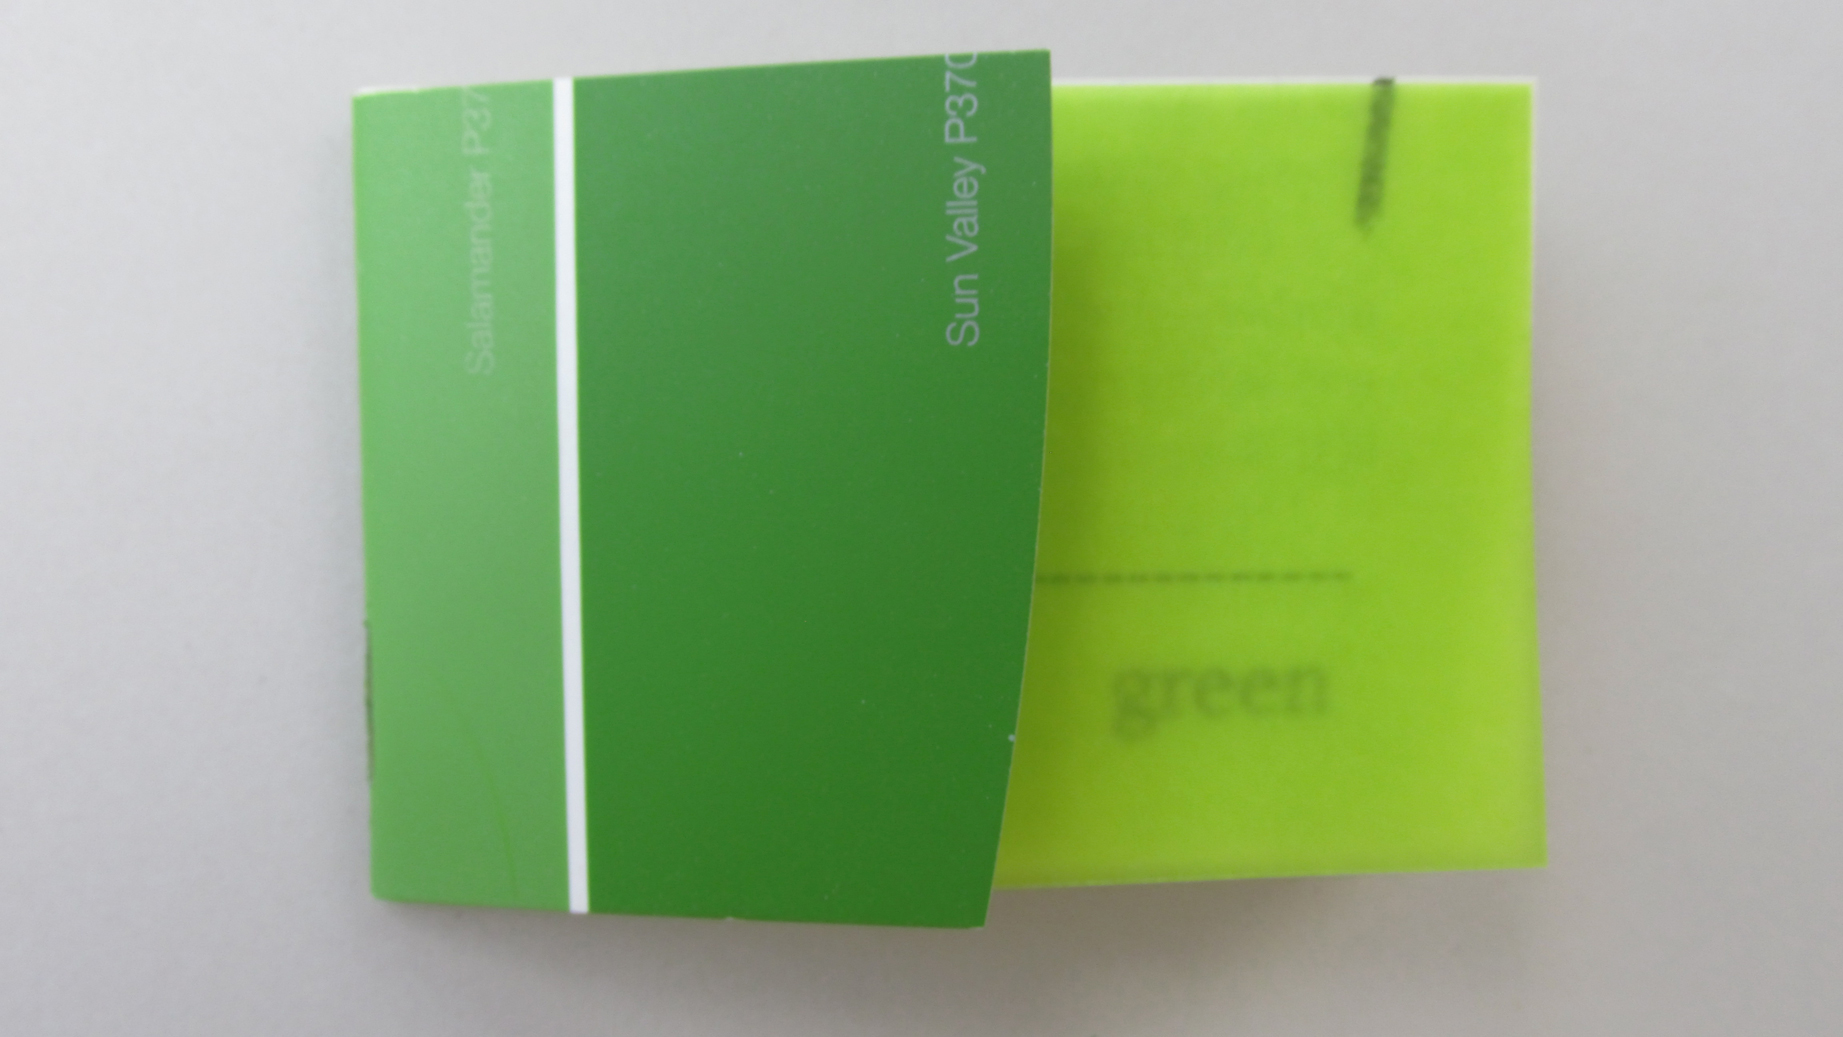 Greene on Green Zine by Kendra Greene of Greene Ink Press